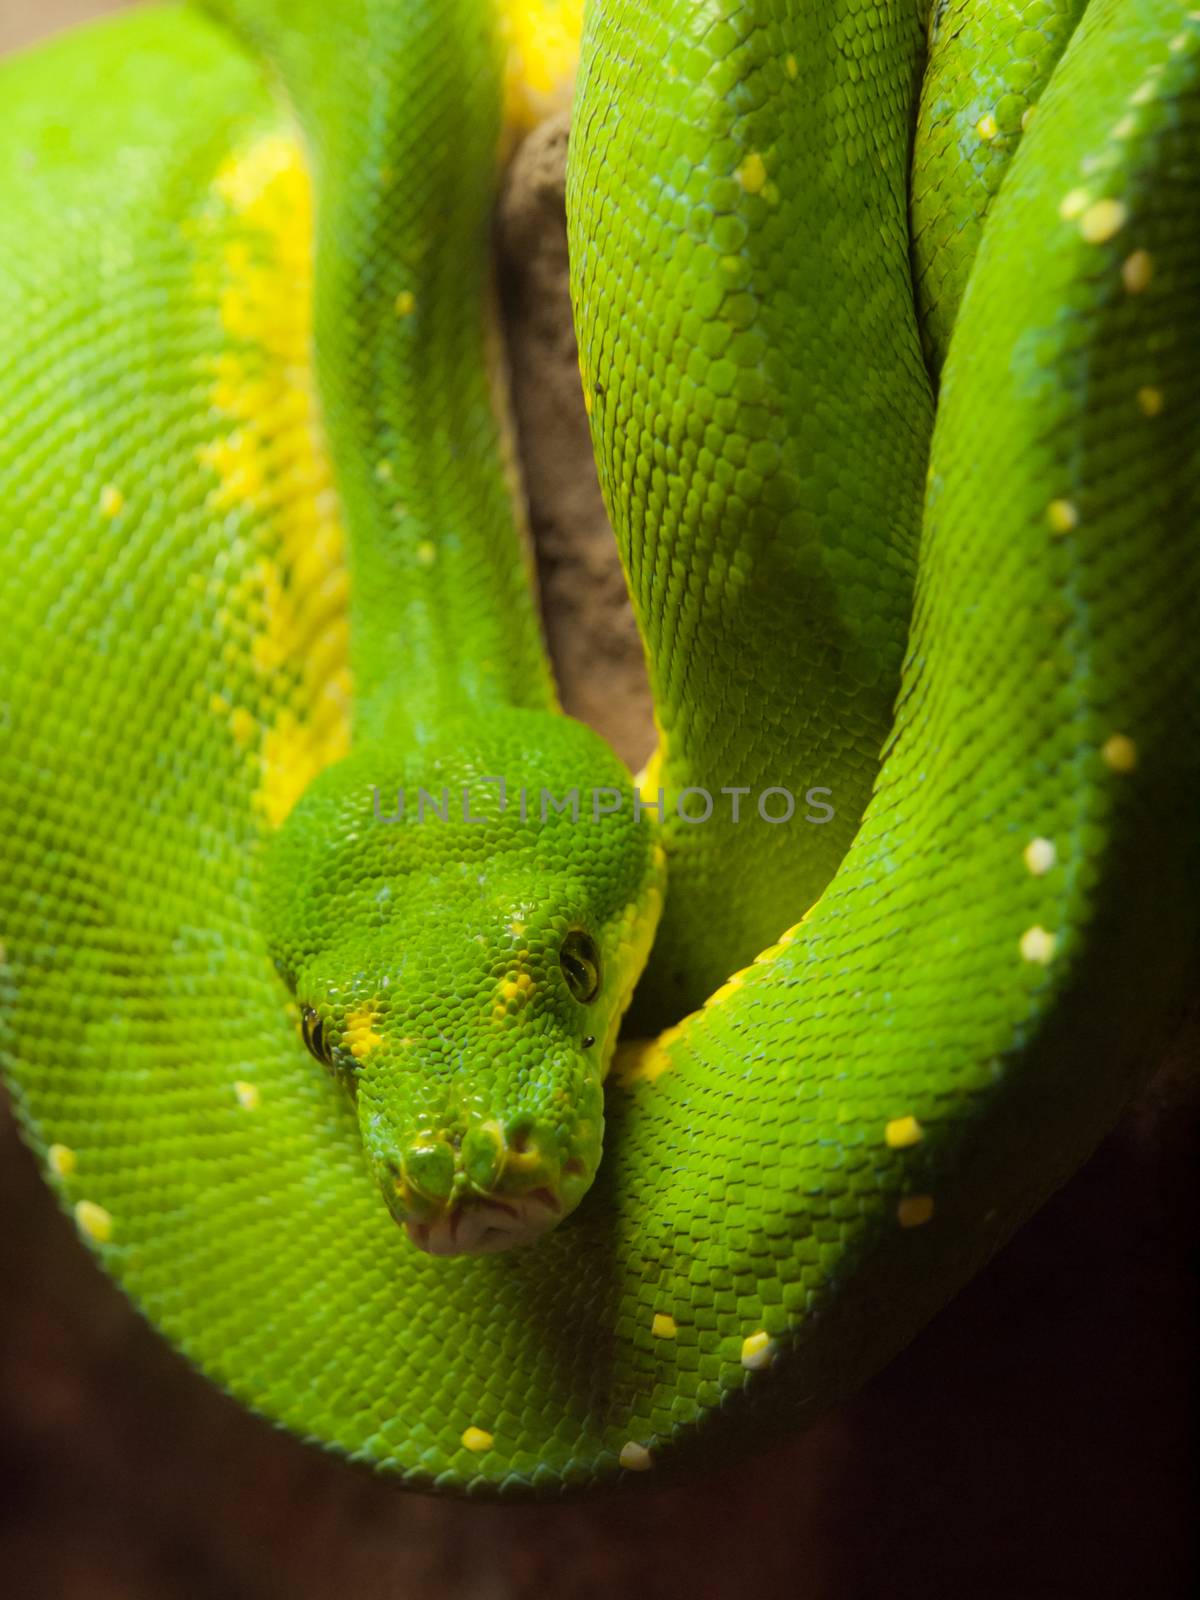 Green tree python (Morelia viridis) - rain forest snake